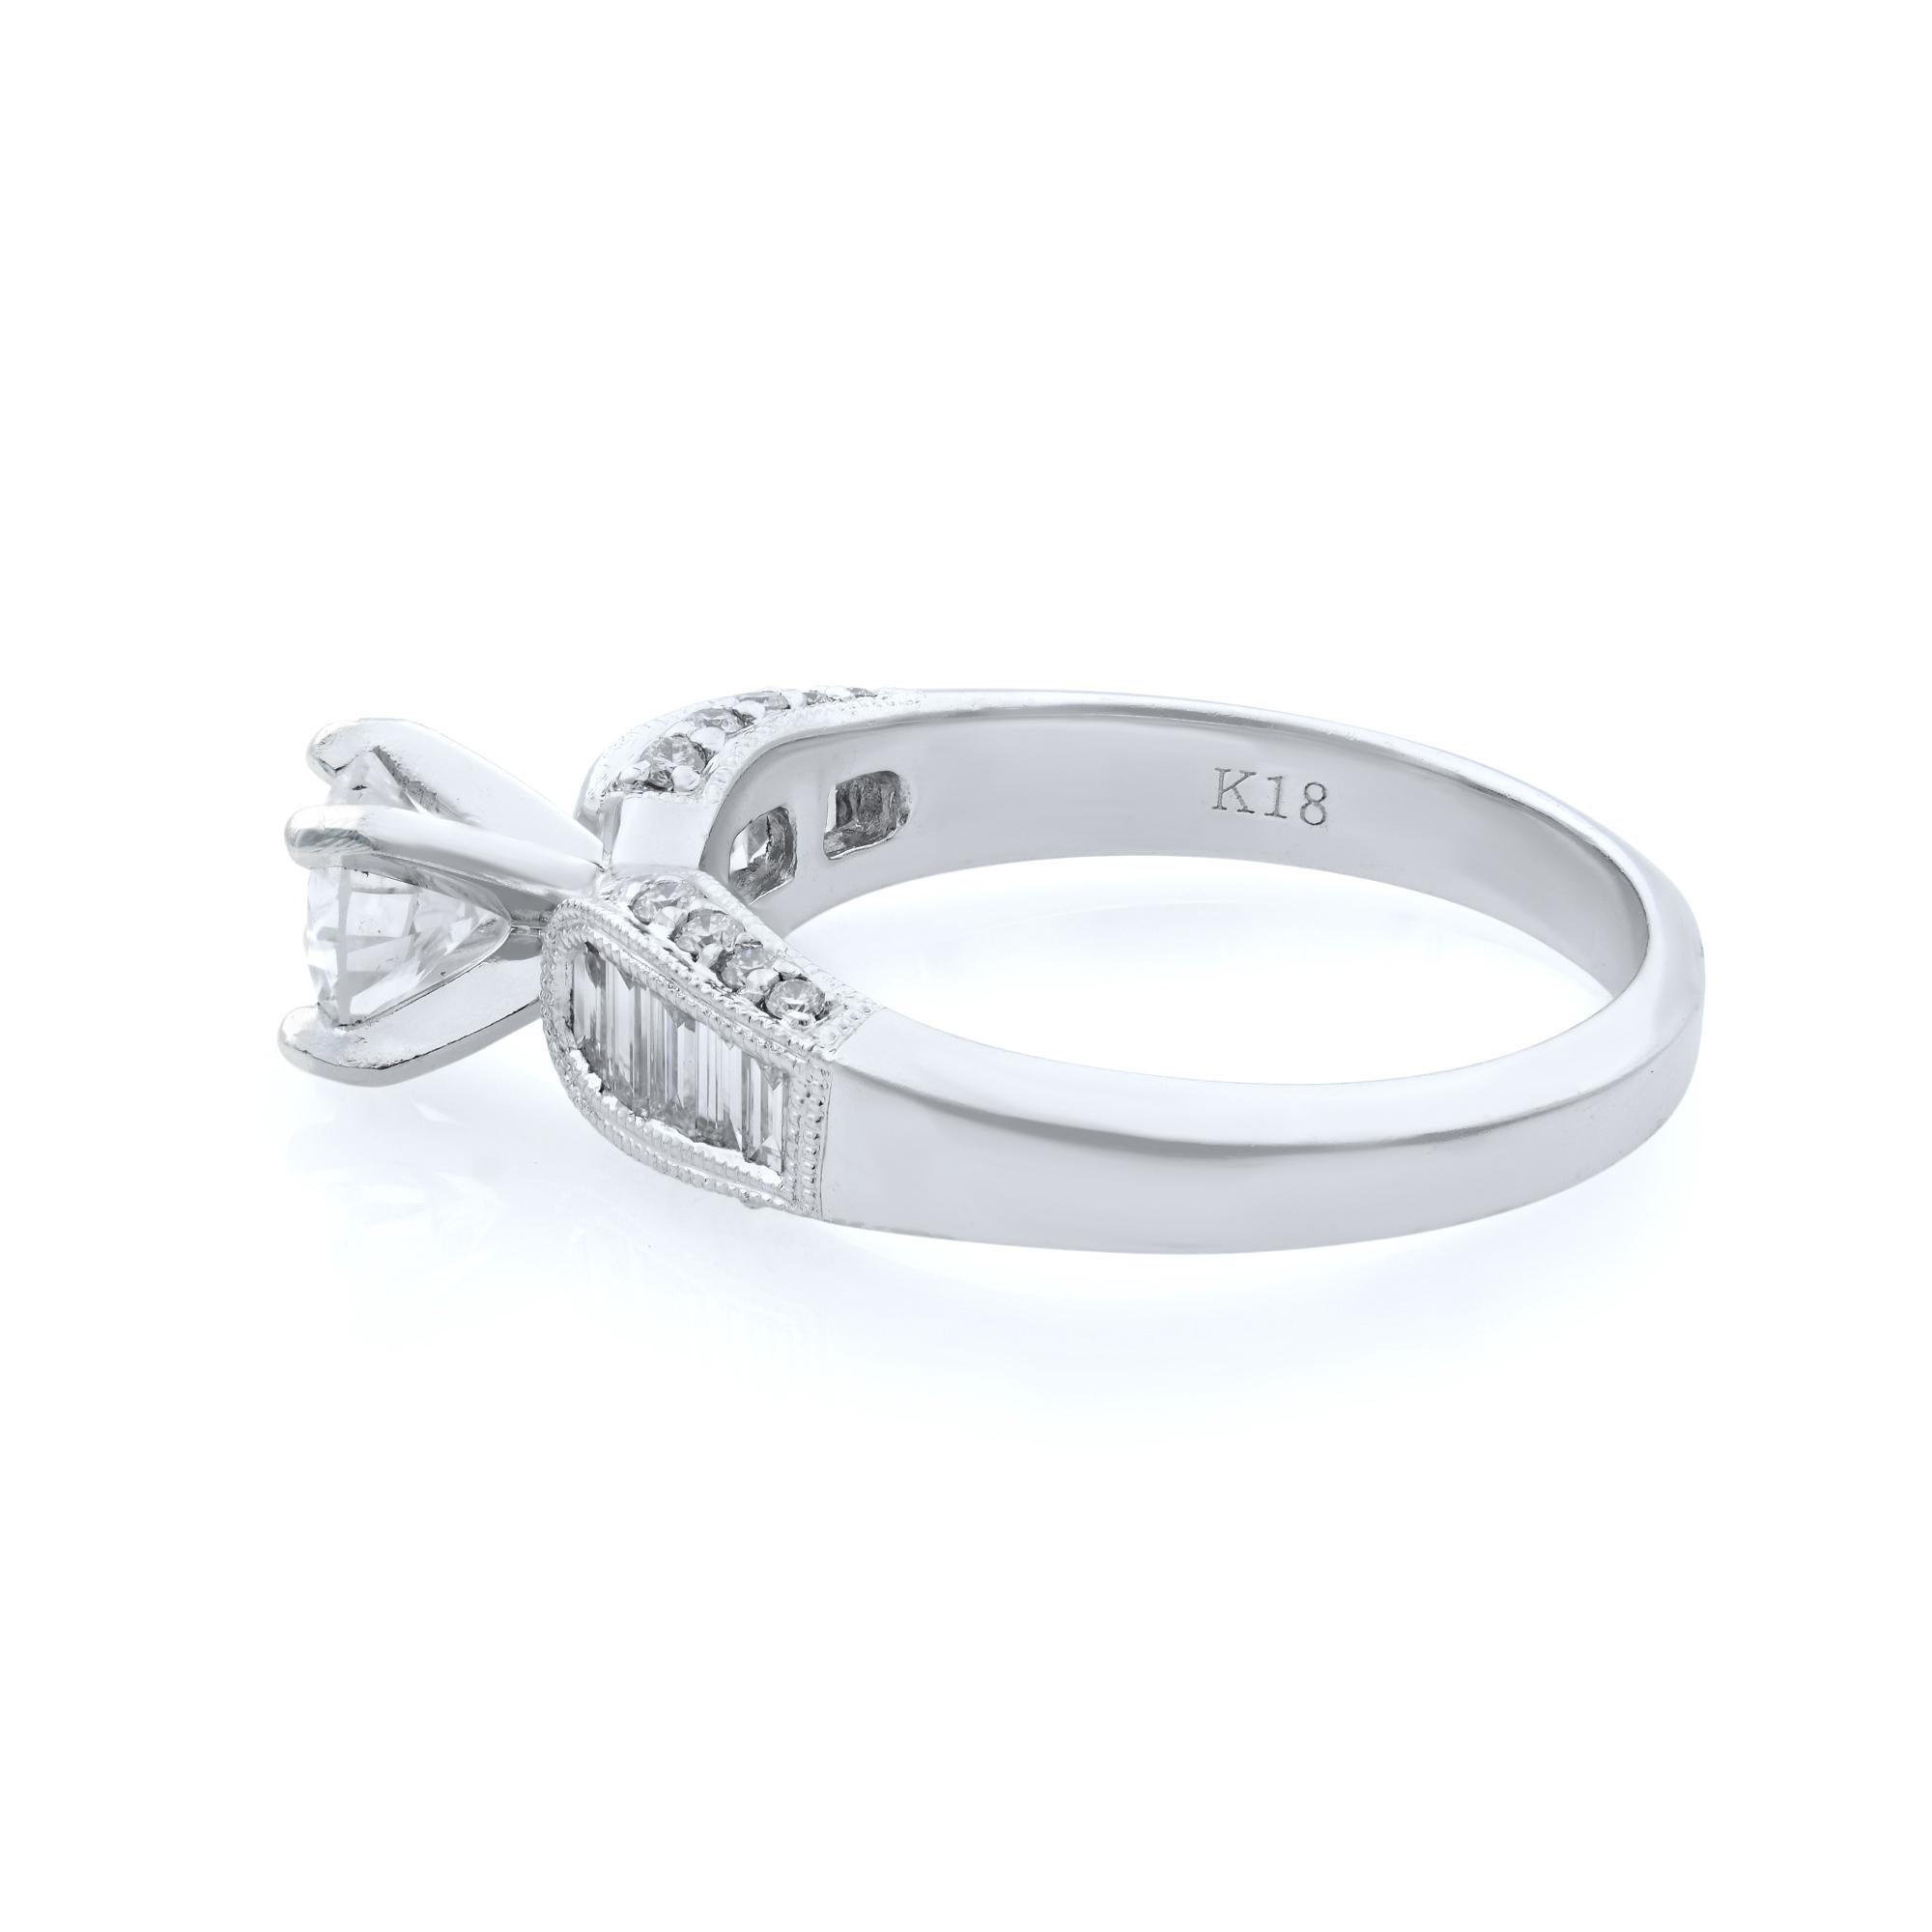 Round Cut Rachel Koen Diamond Engagement Ring 18K White Gold 1.03Cttw For Sale